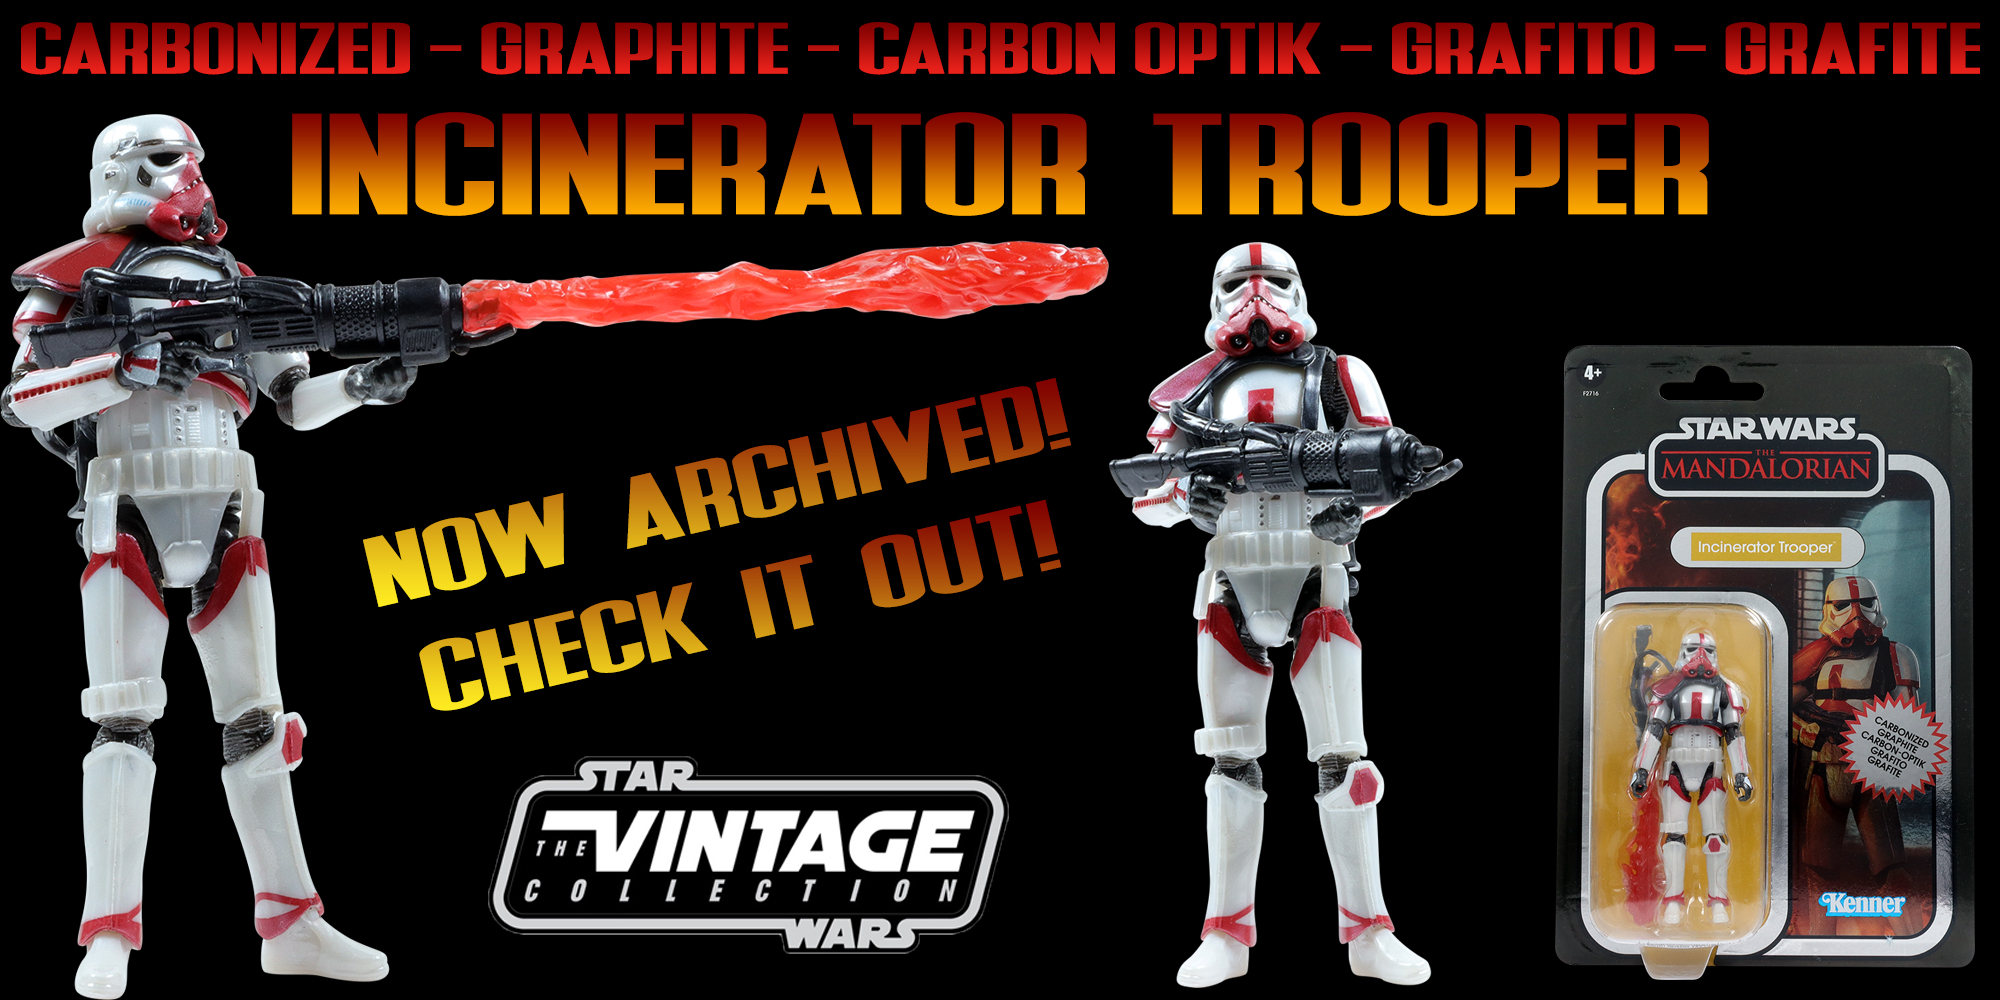 Incinerator Trooper Carbonized - Added!